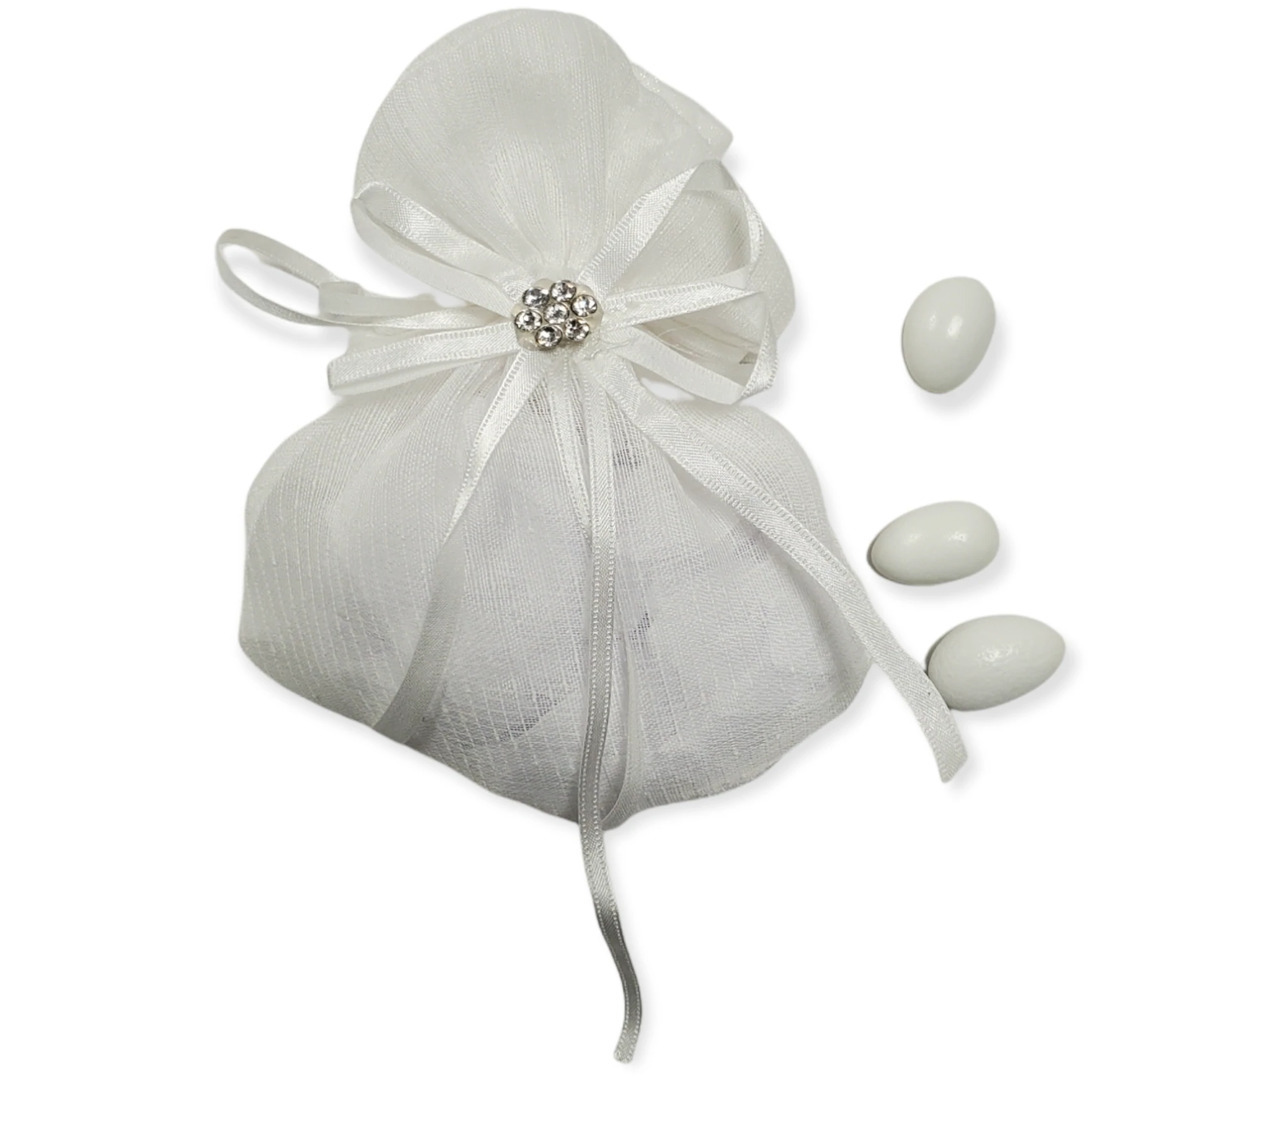 Confetti Pouches (Jordan almond holders)